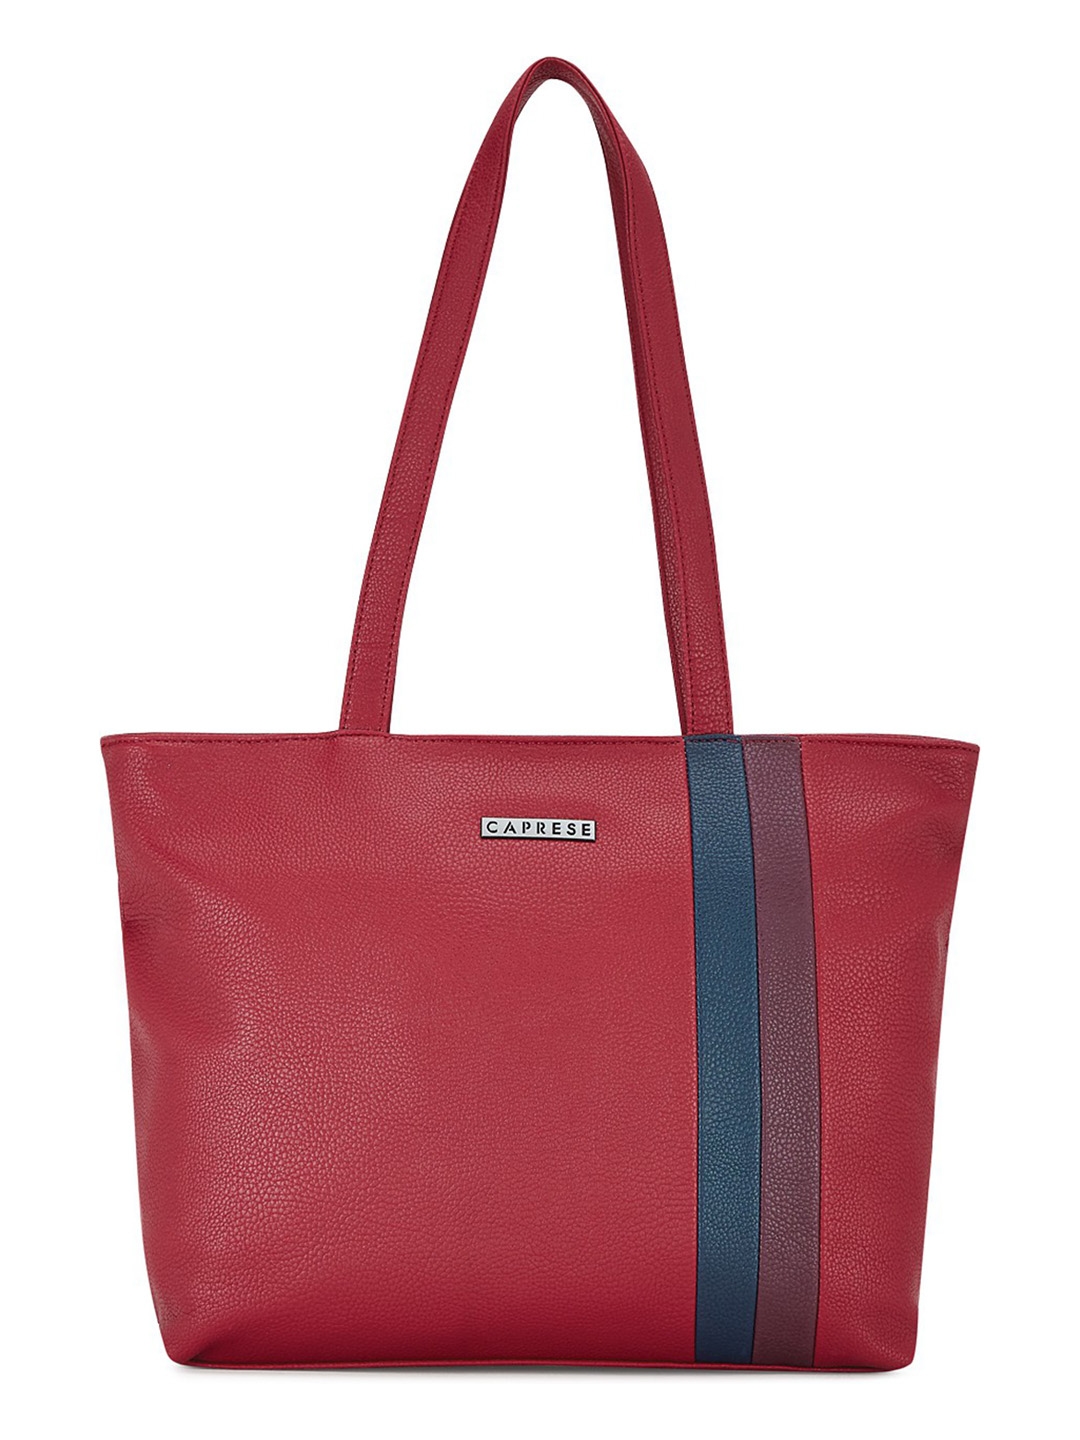 Caprese Women Red Solid Tote Bag